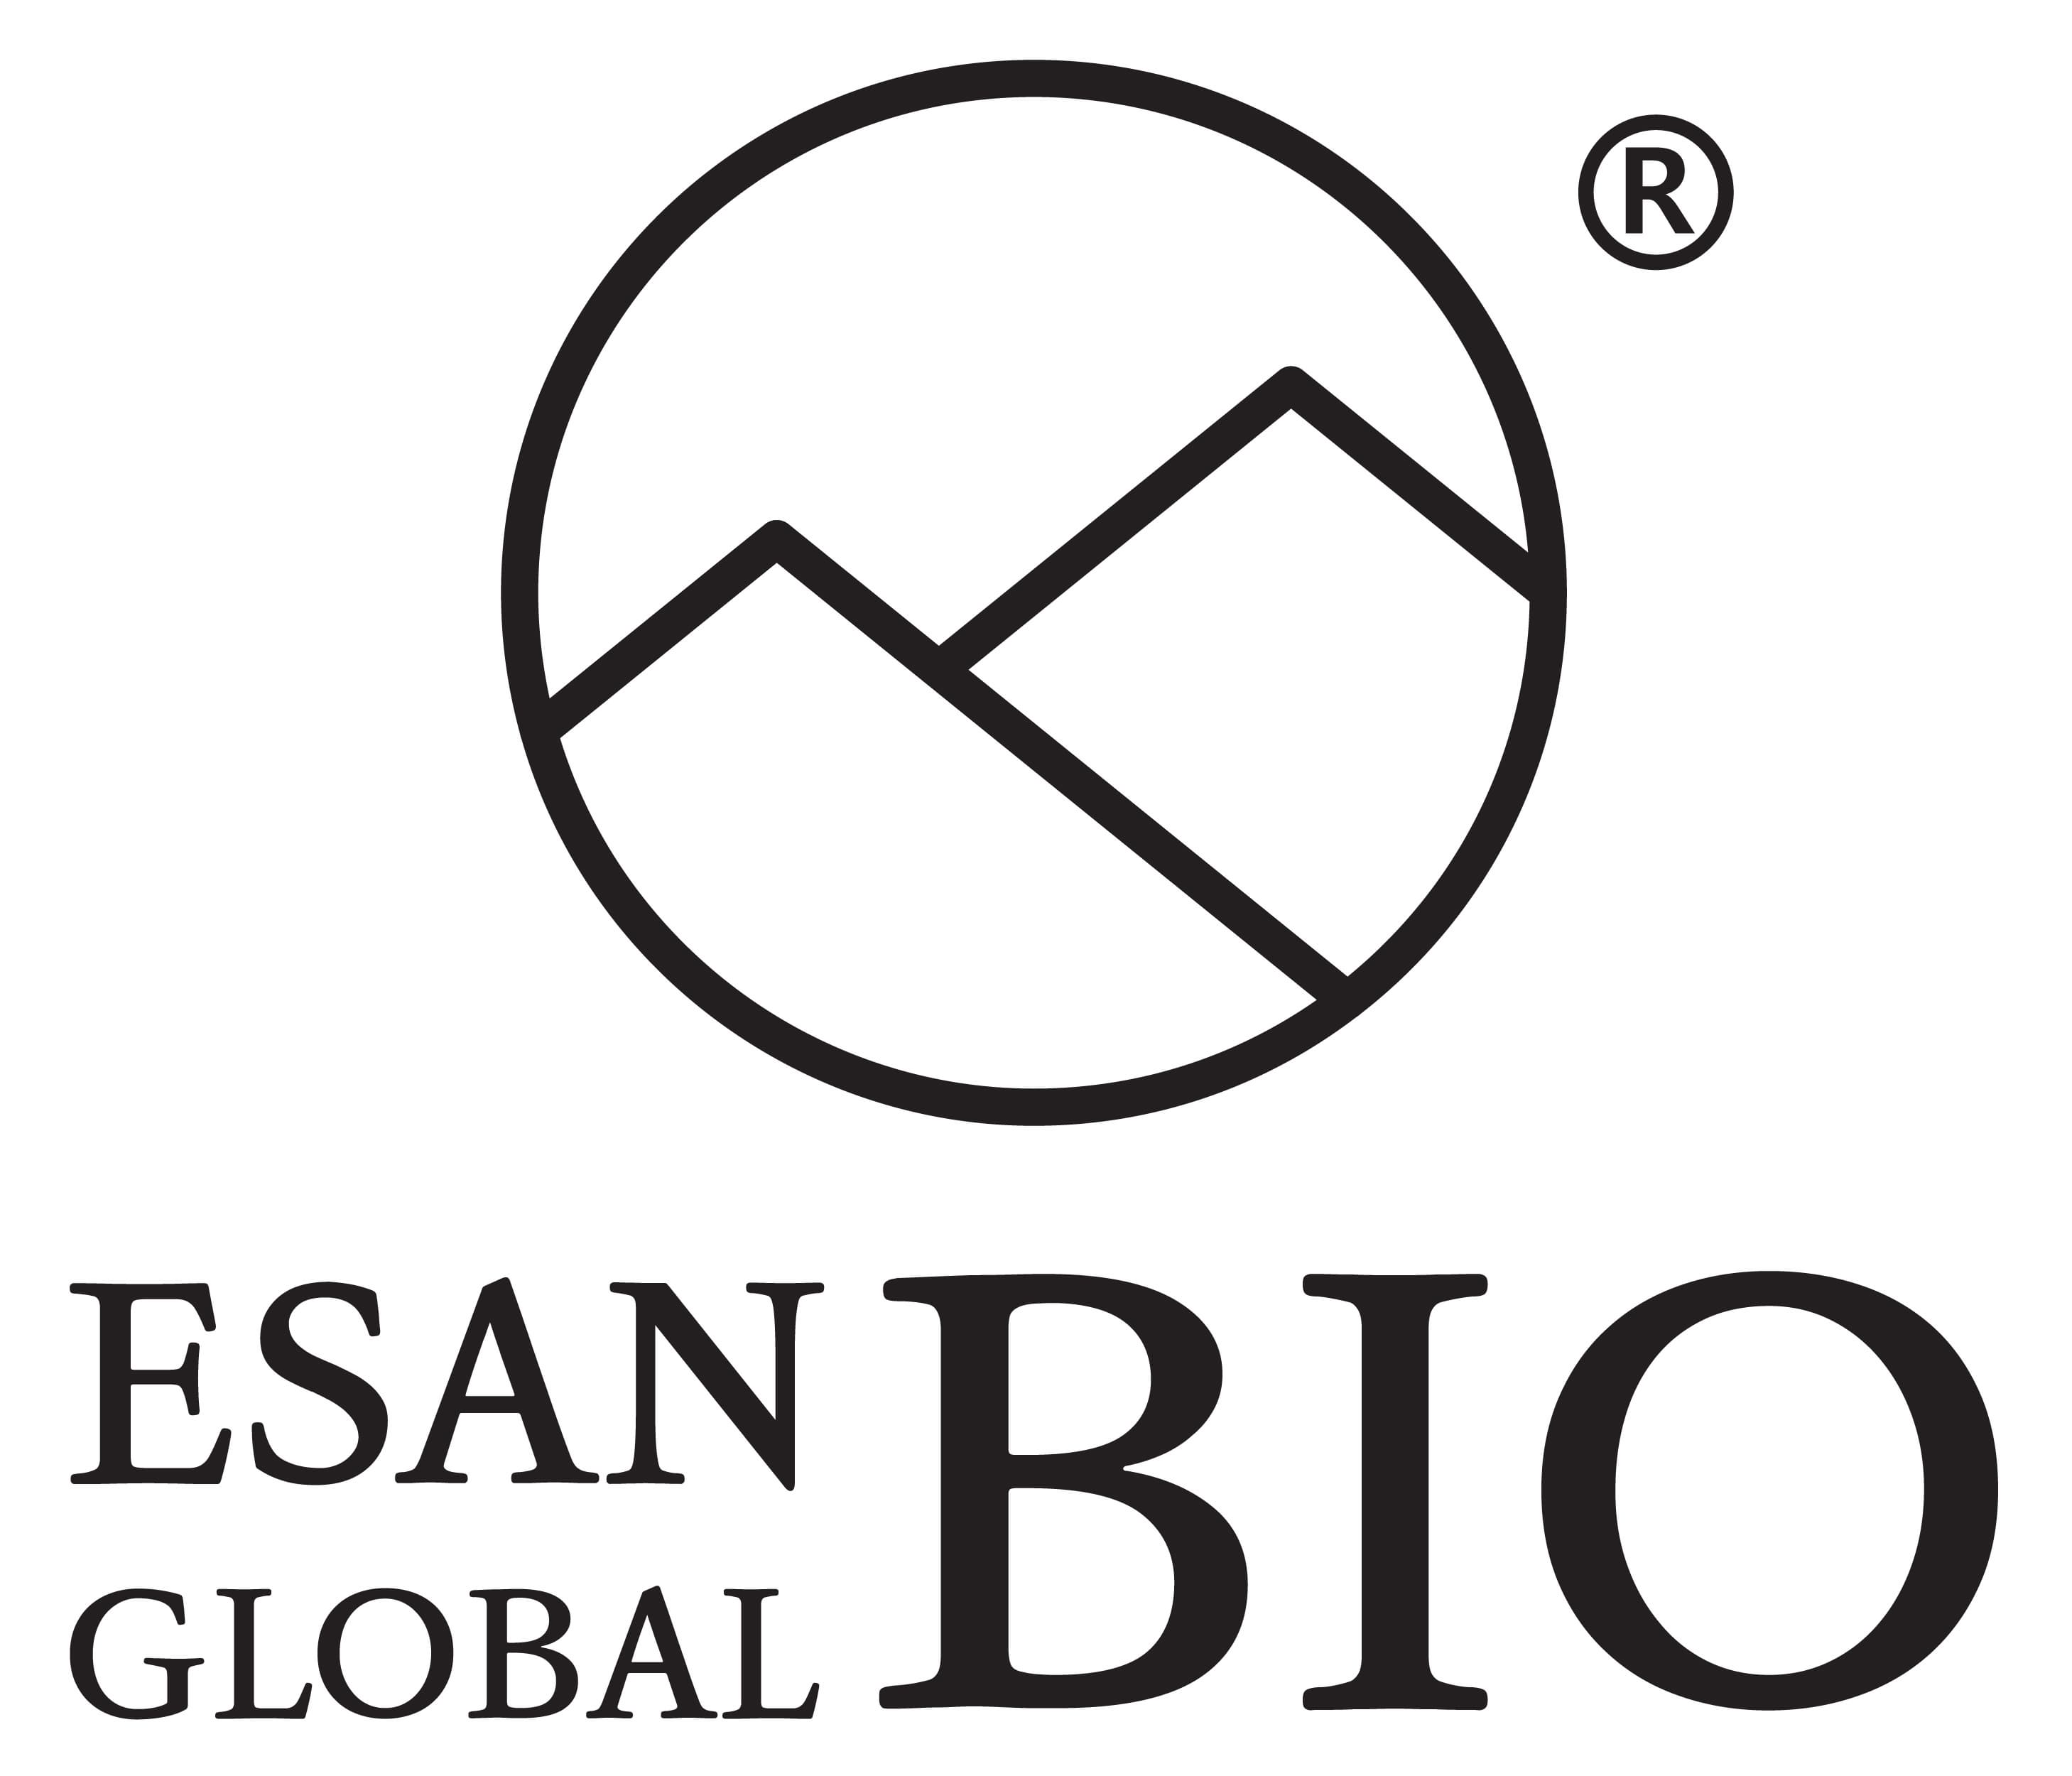 Esan Global Bio Co., Ltd.